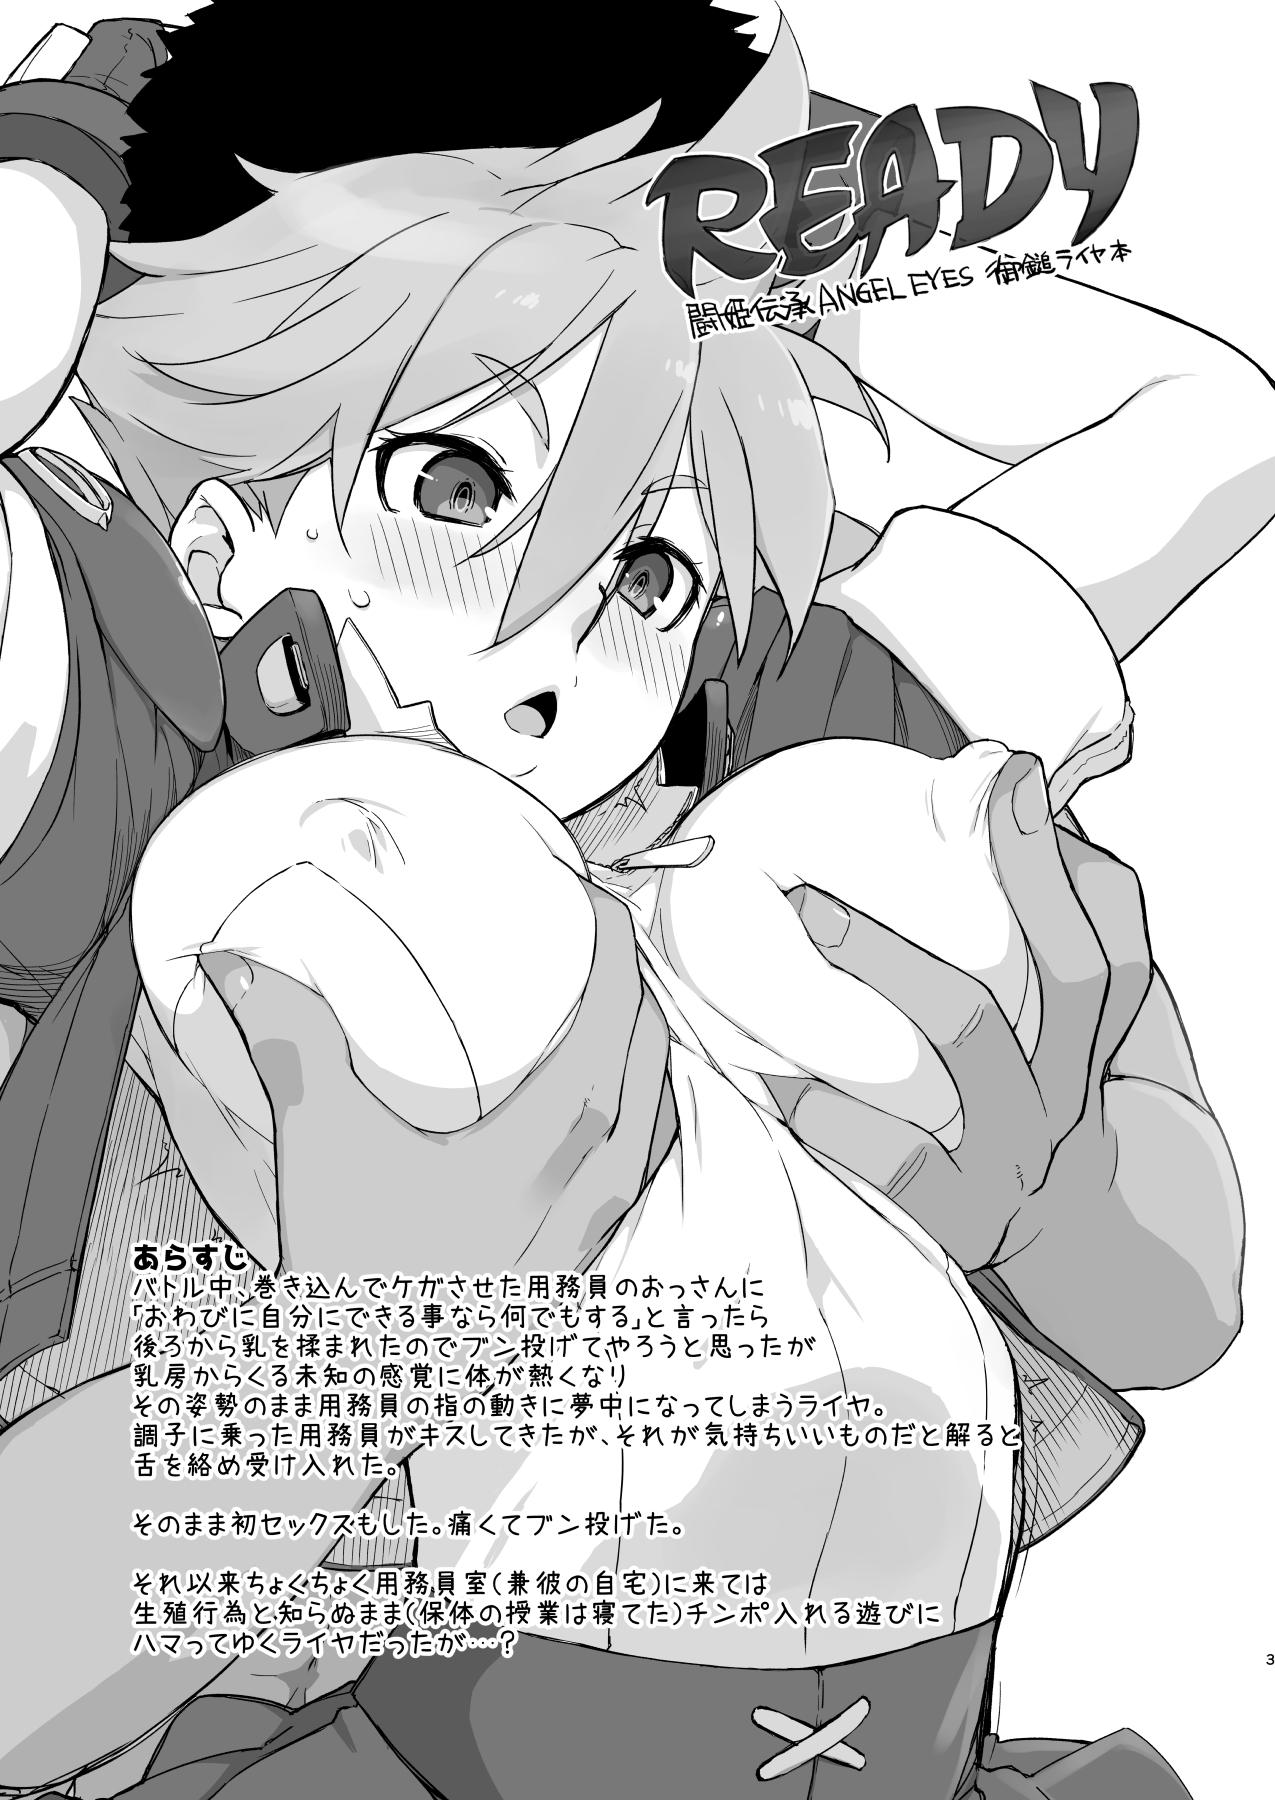 Teenager READY - Touki denshou angel eyes Sluts - Page 2